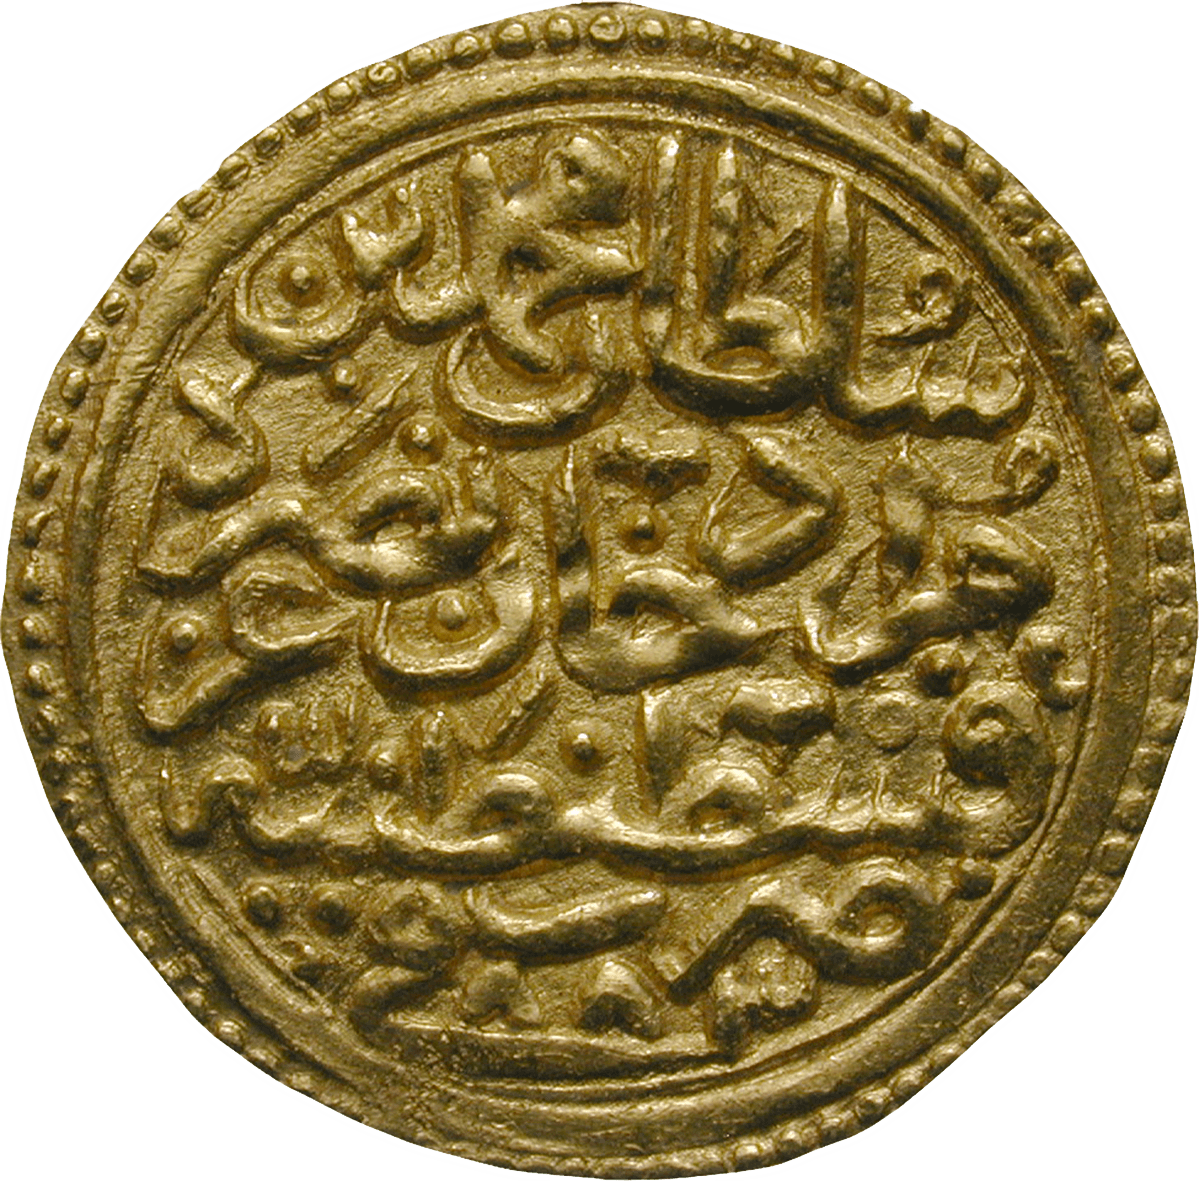 Osmanisches Reich, Mehmed II. Altun 885 AH (obverse)